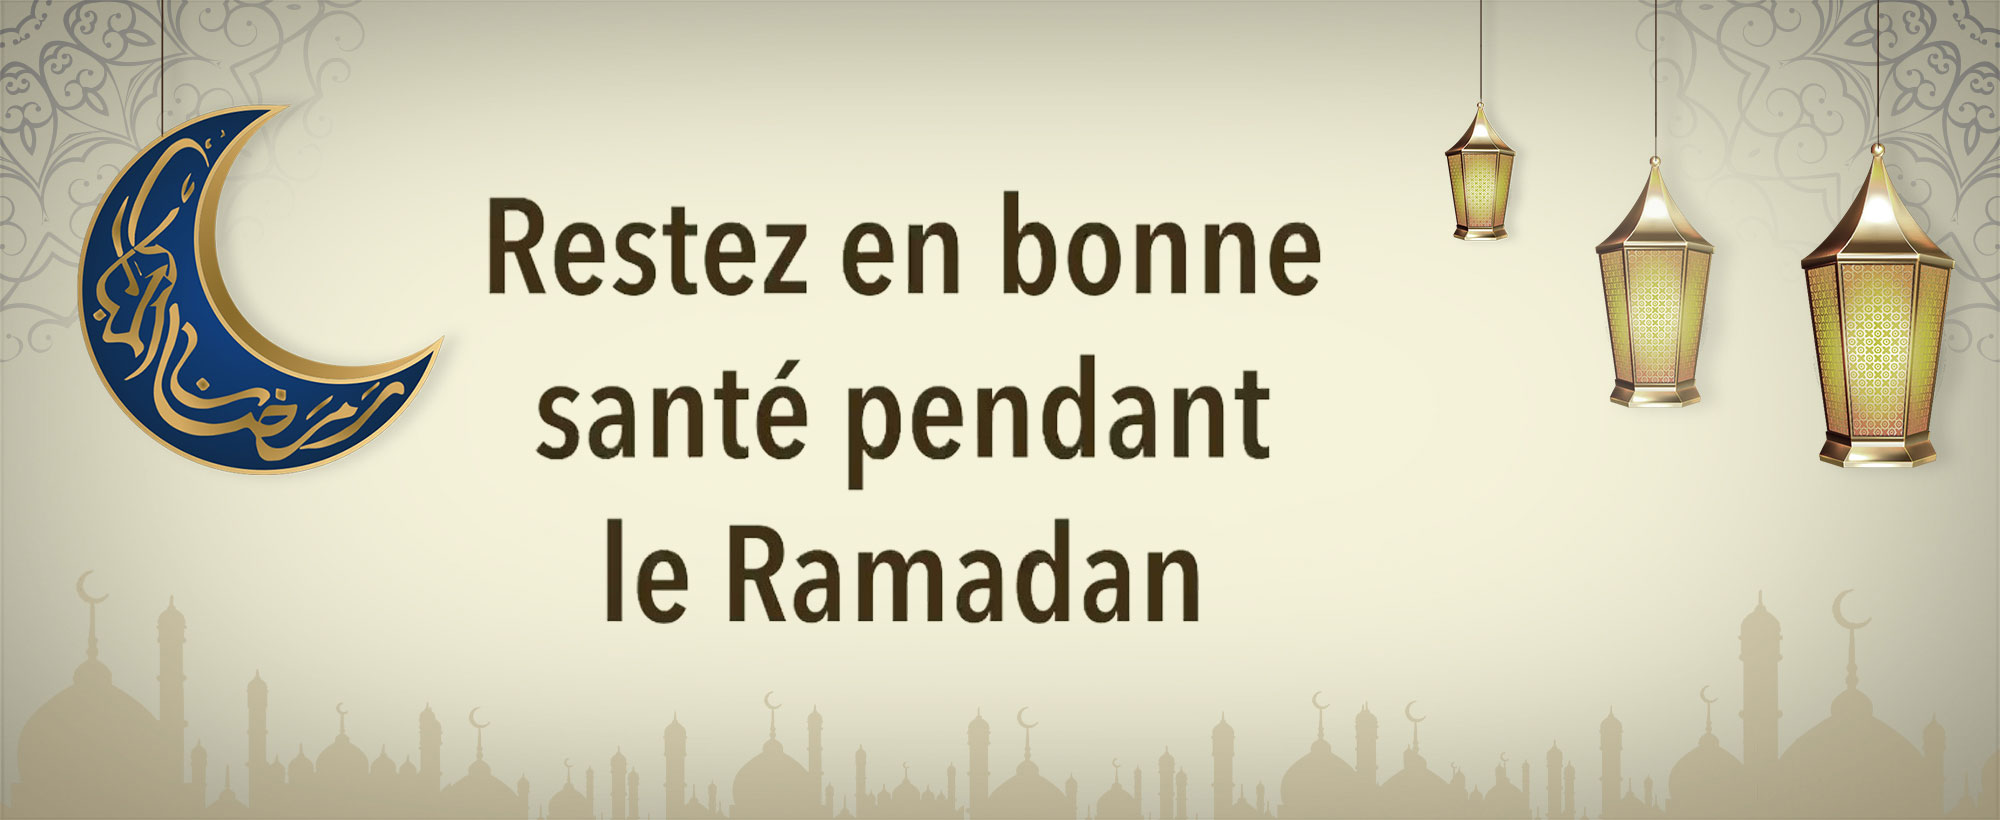 ramadan_banner